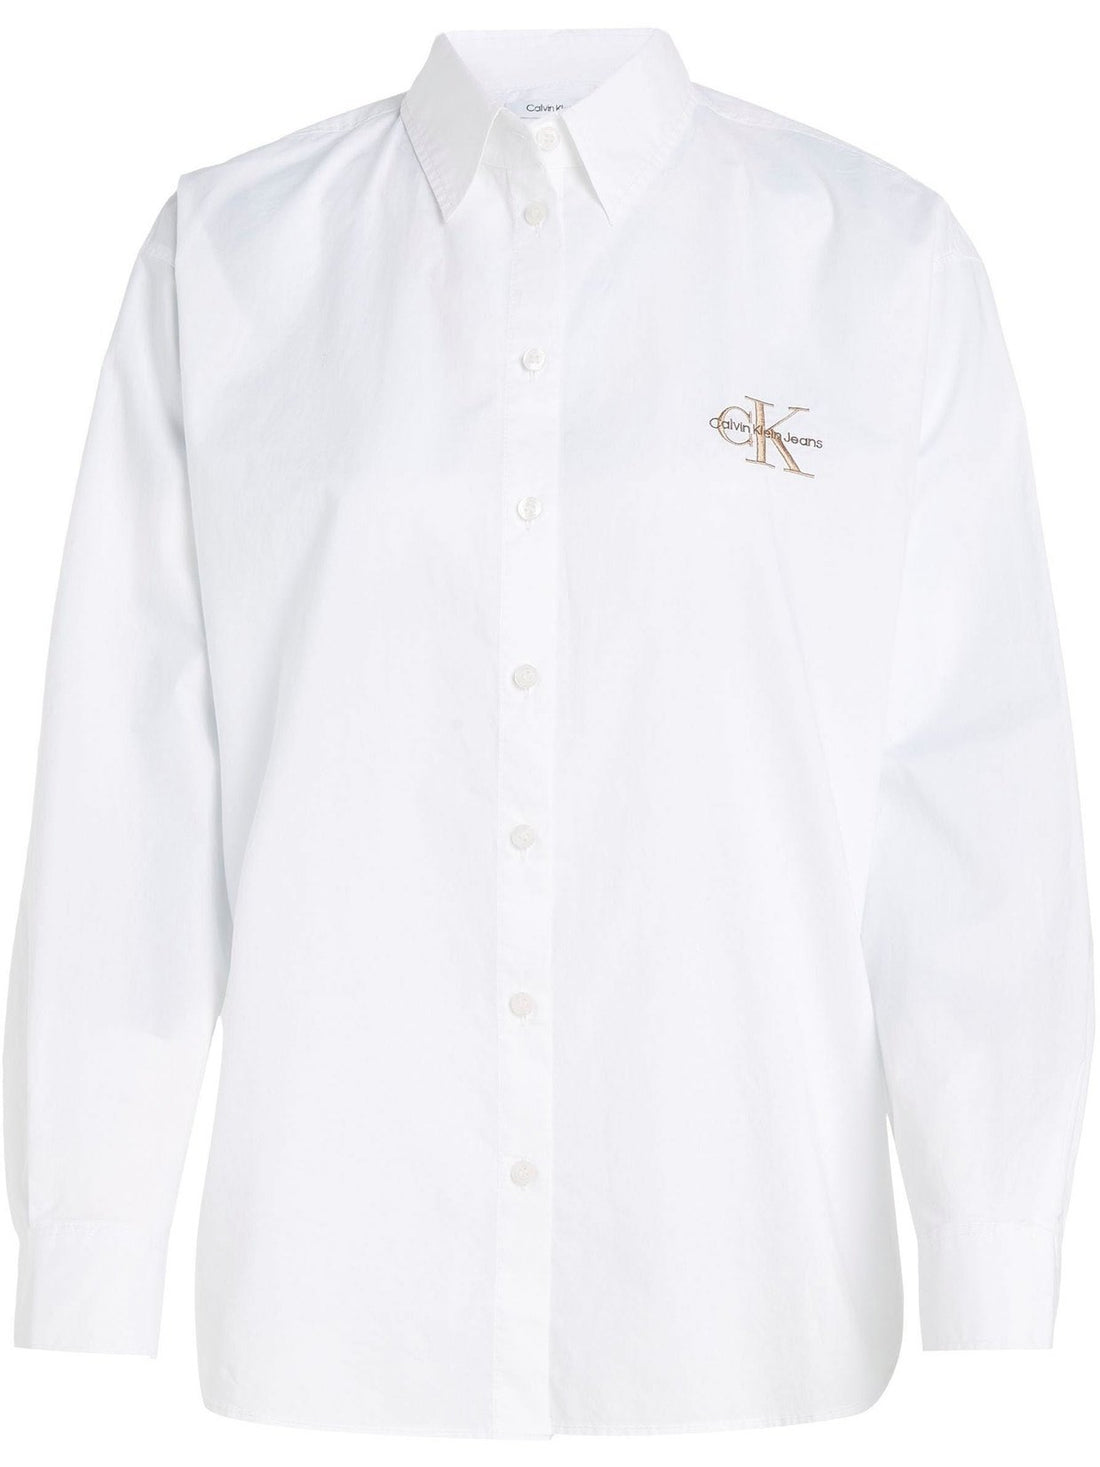 Monologo relaxed blouse - bright white